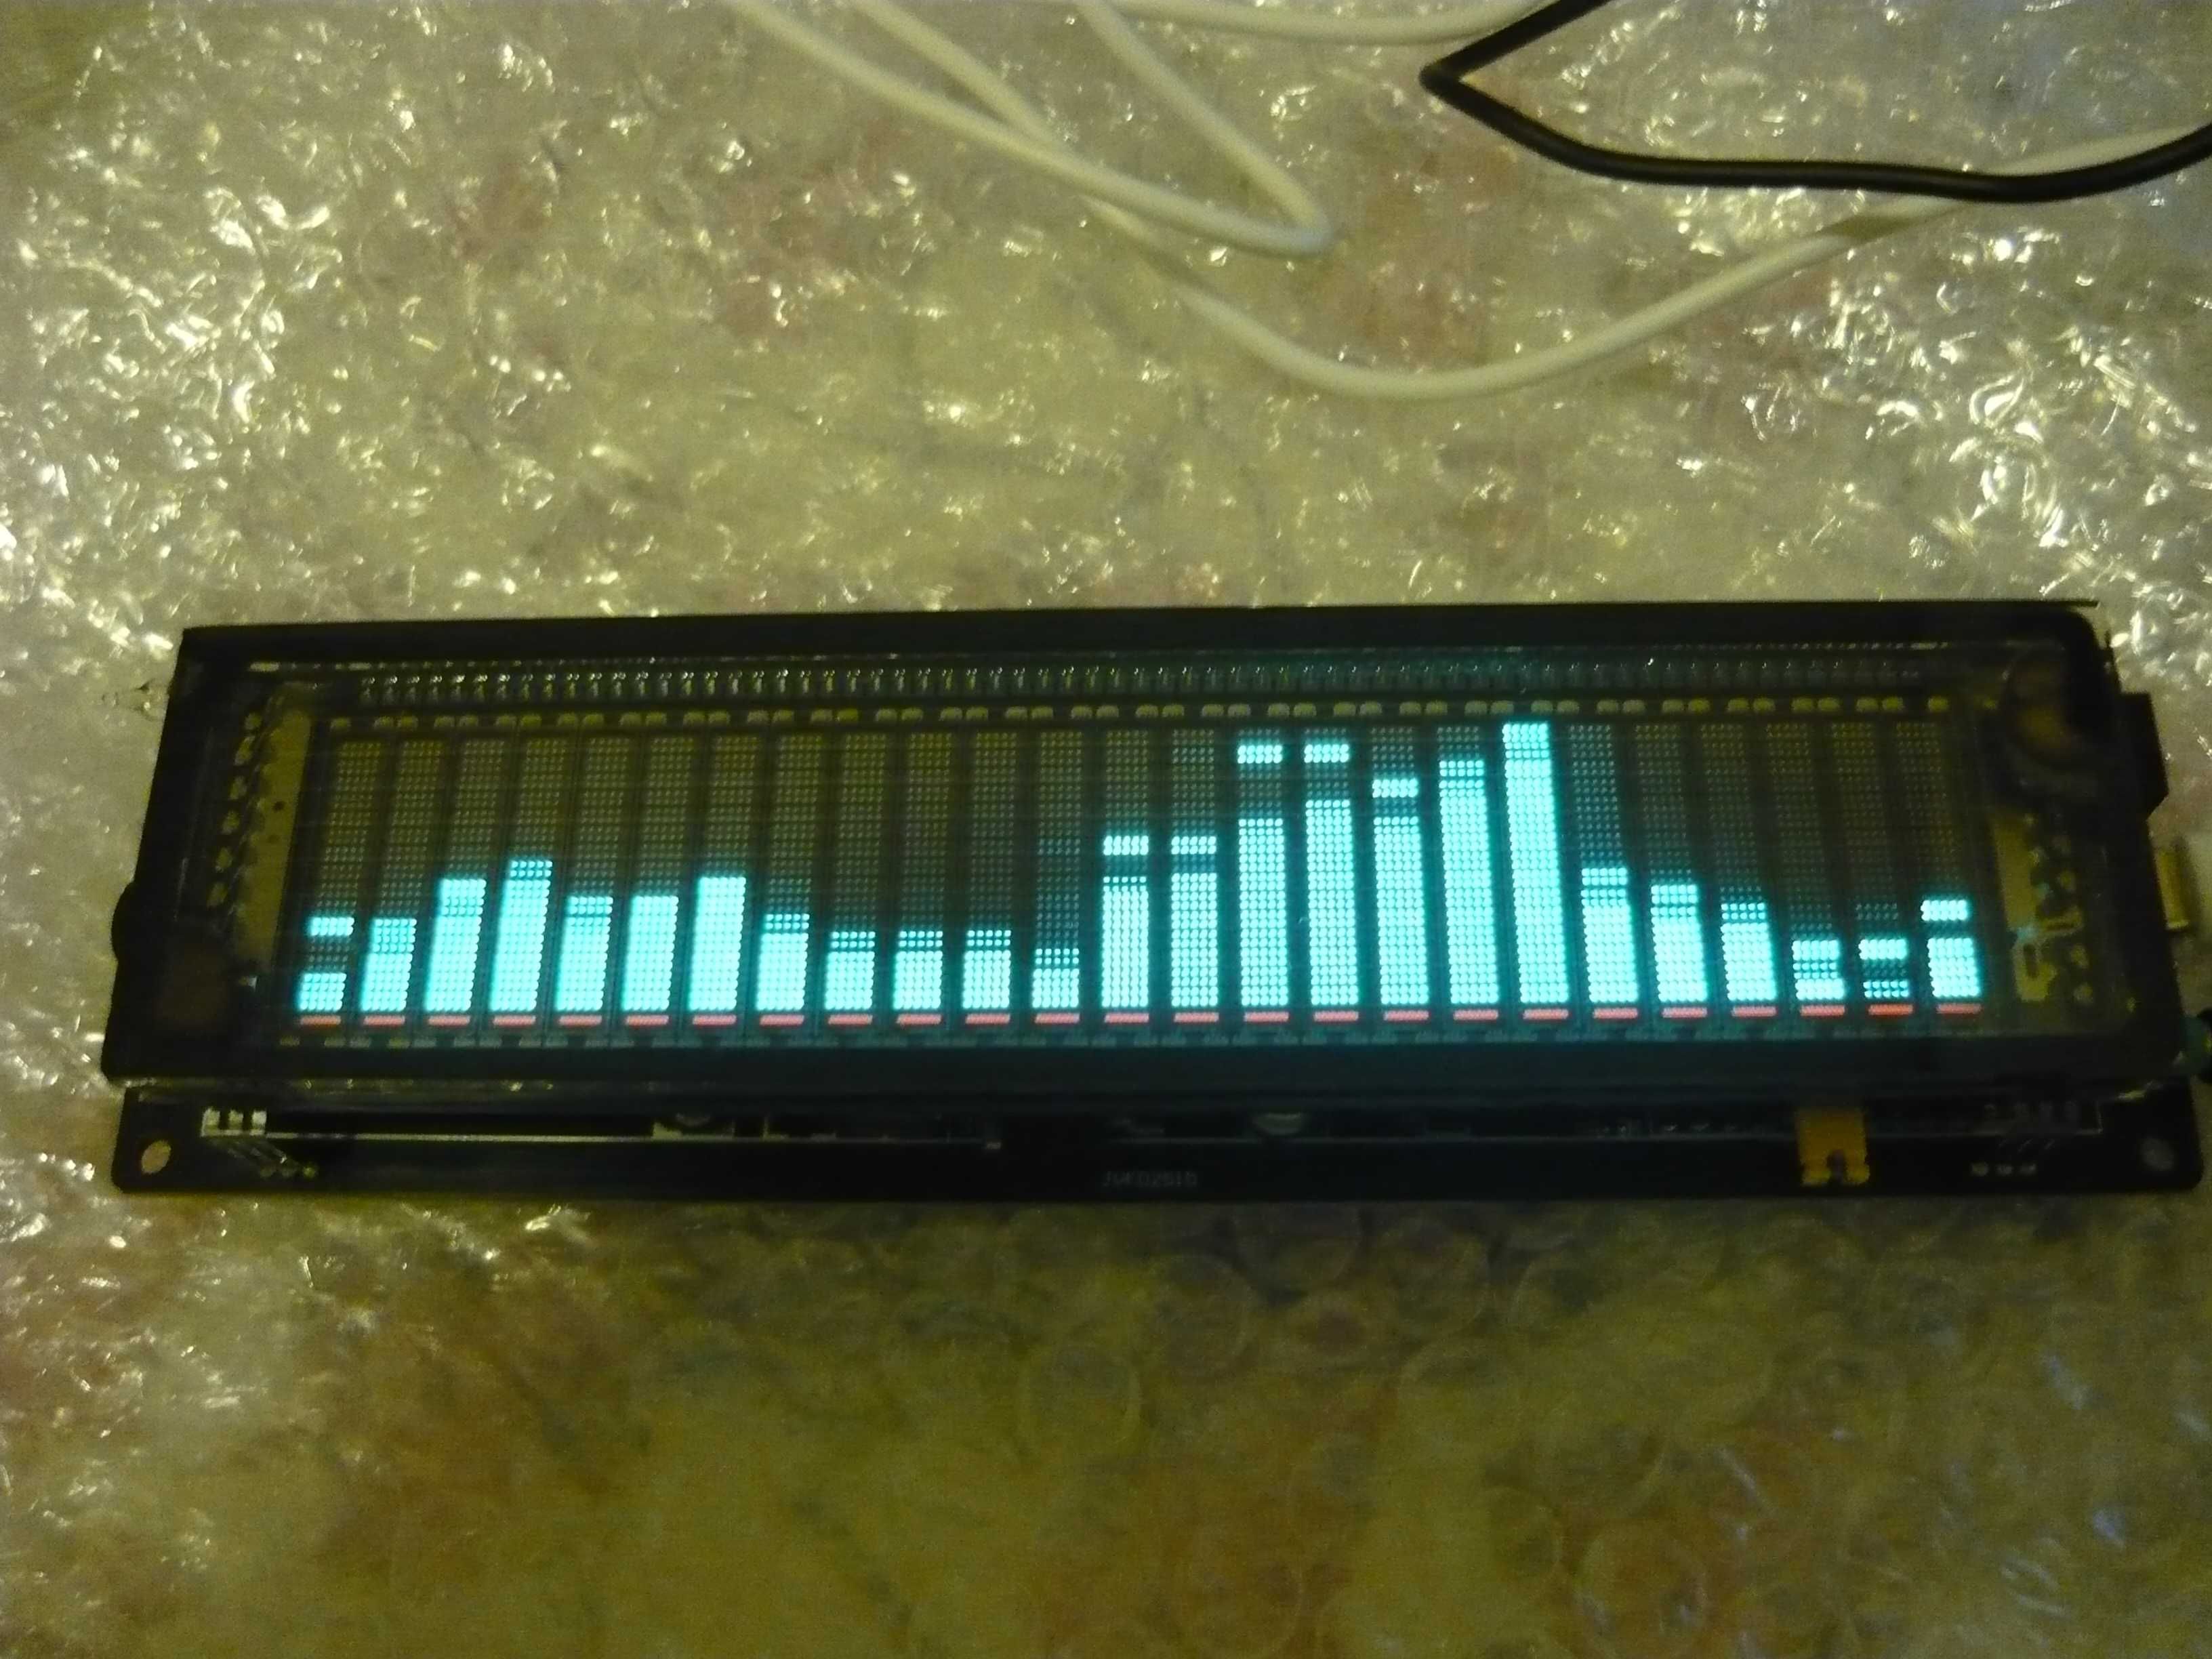 Wskaźnik widmo audio Technics spectrum korektor equalizer analizator B